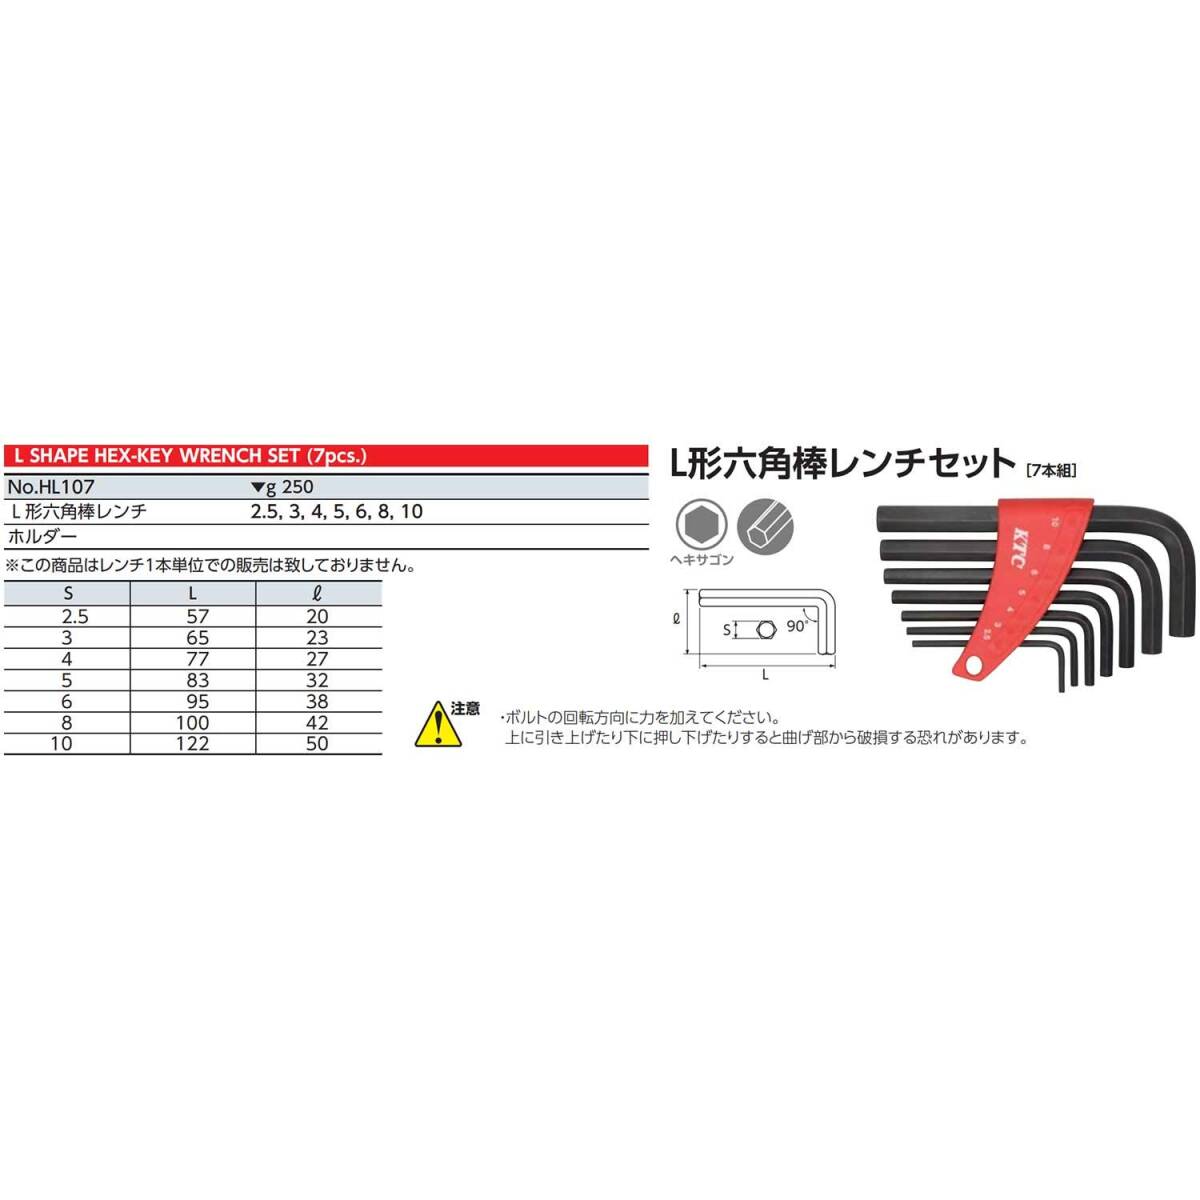 【特価商品】京都機械工具(KTC) L型 六角棒レンチ セット HL107_画像2